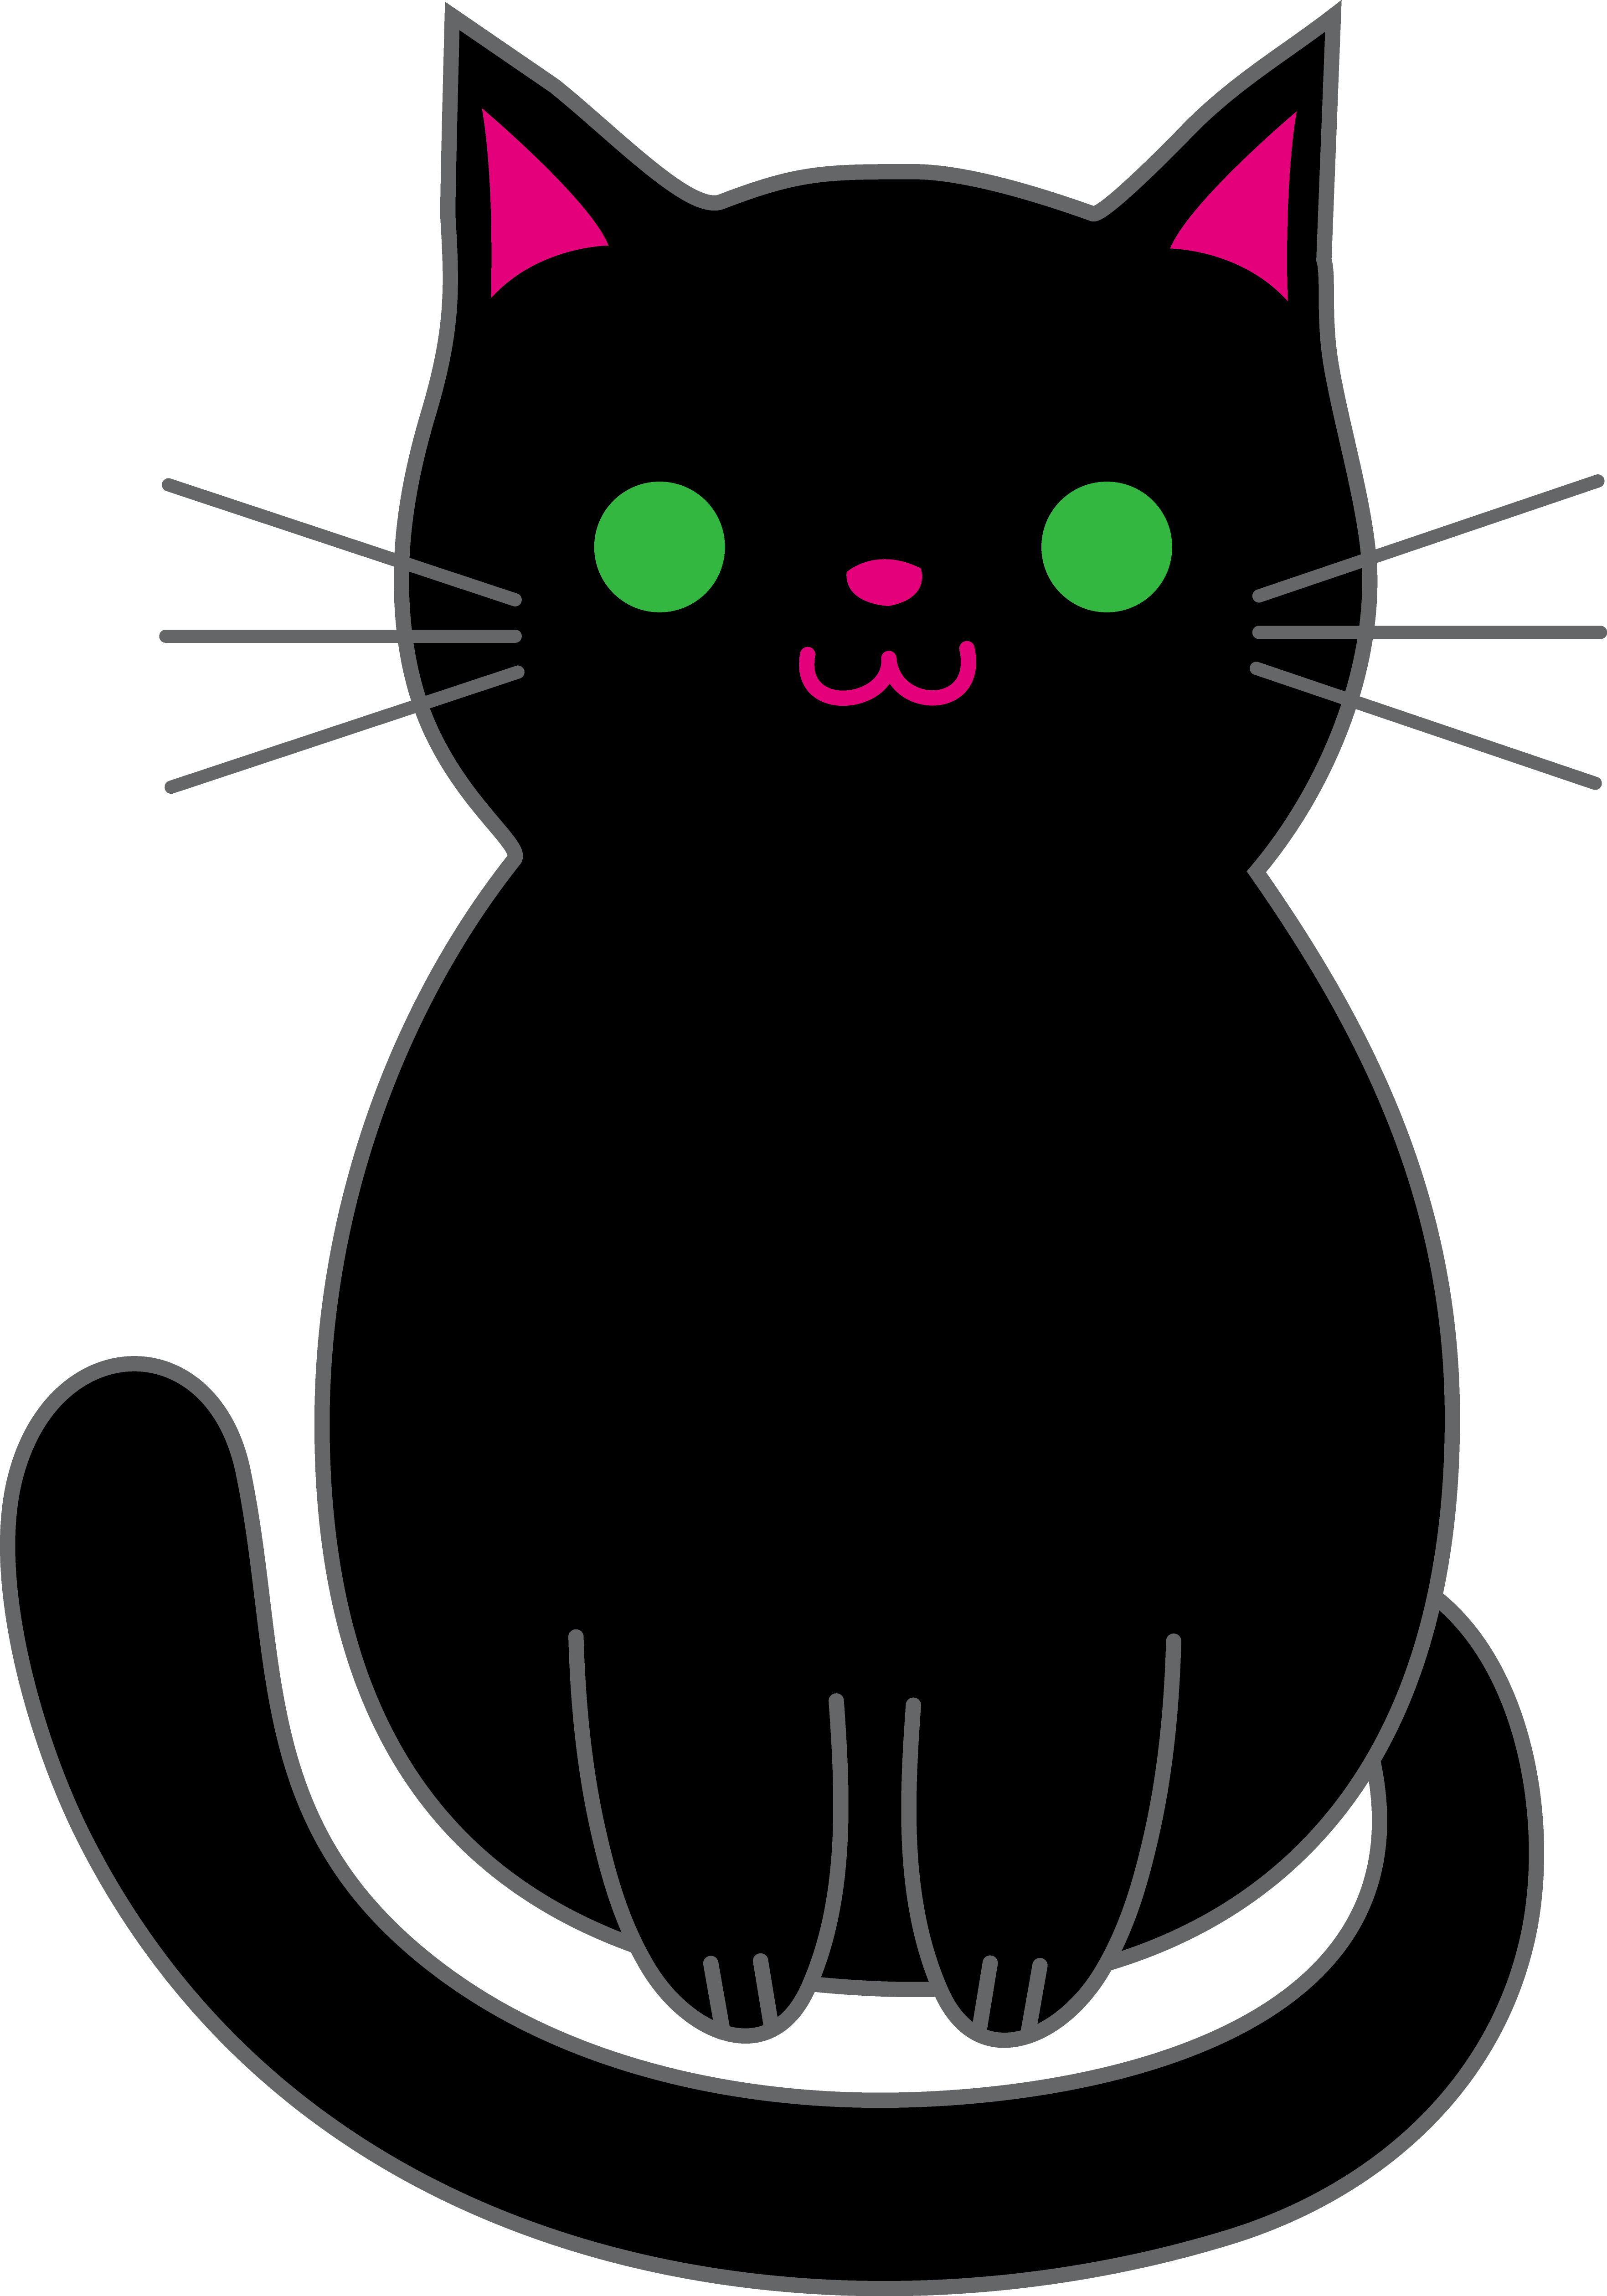 Black Cat Cartoon Pictures Cliparts.co